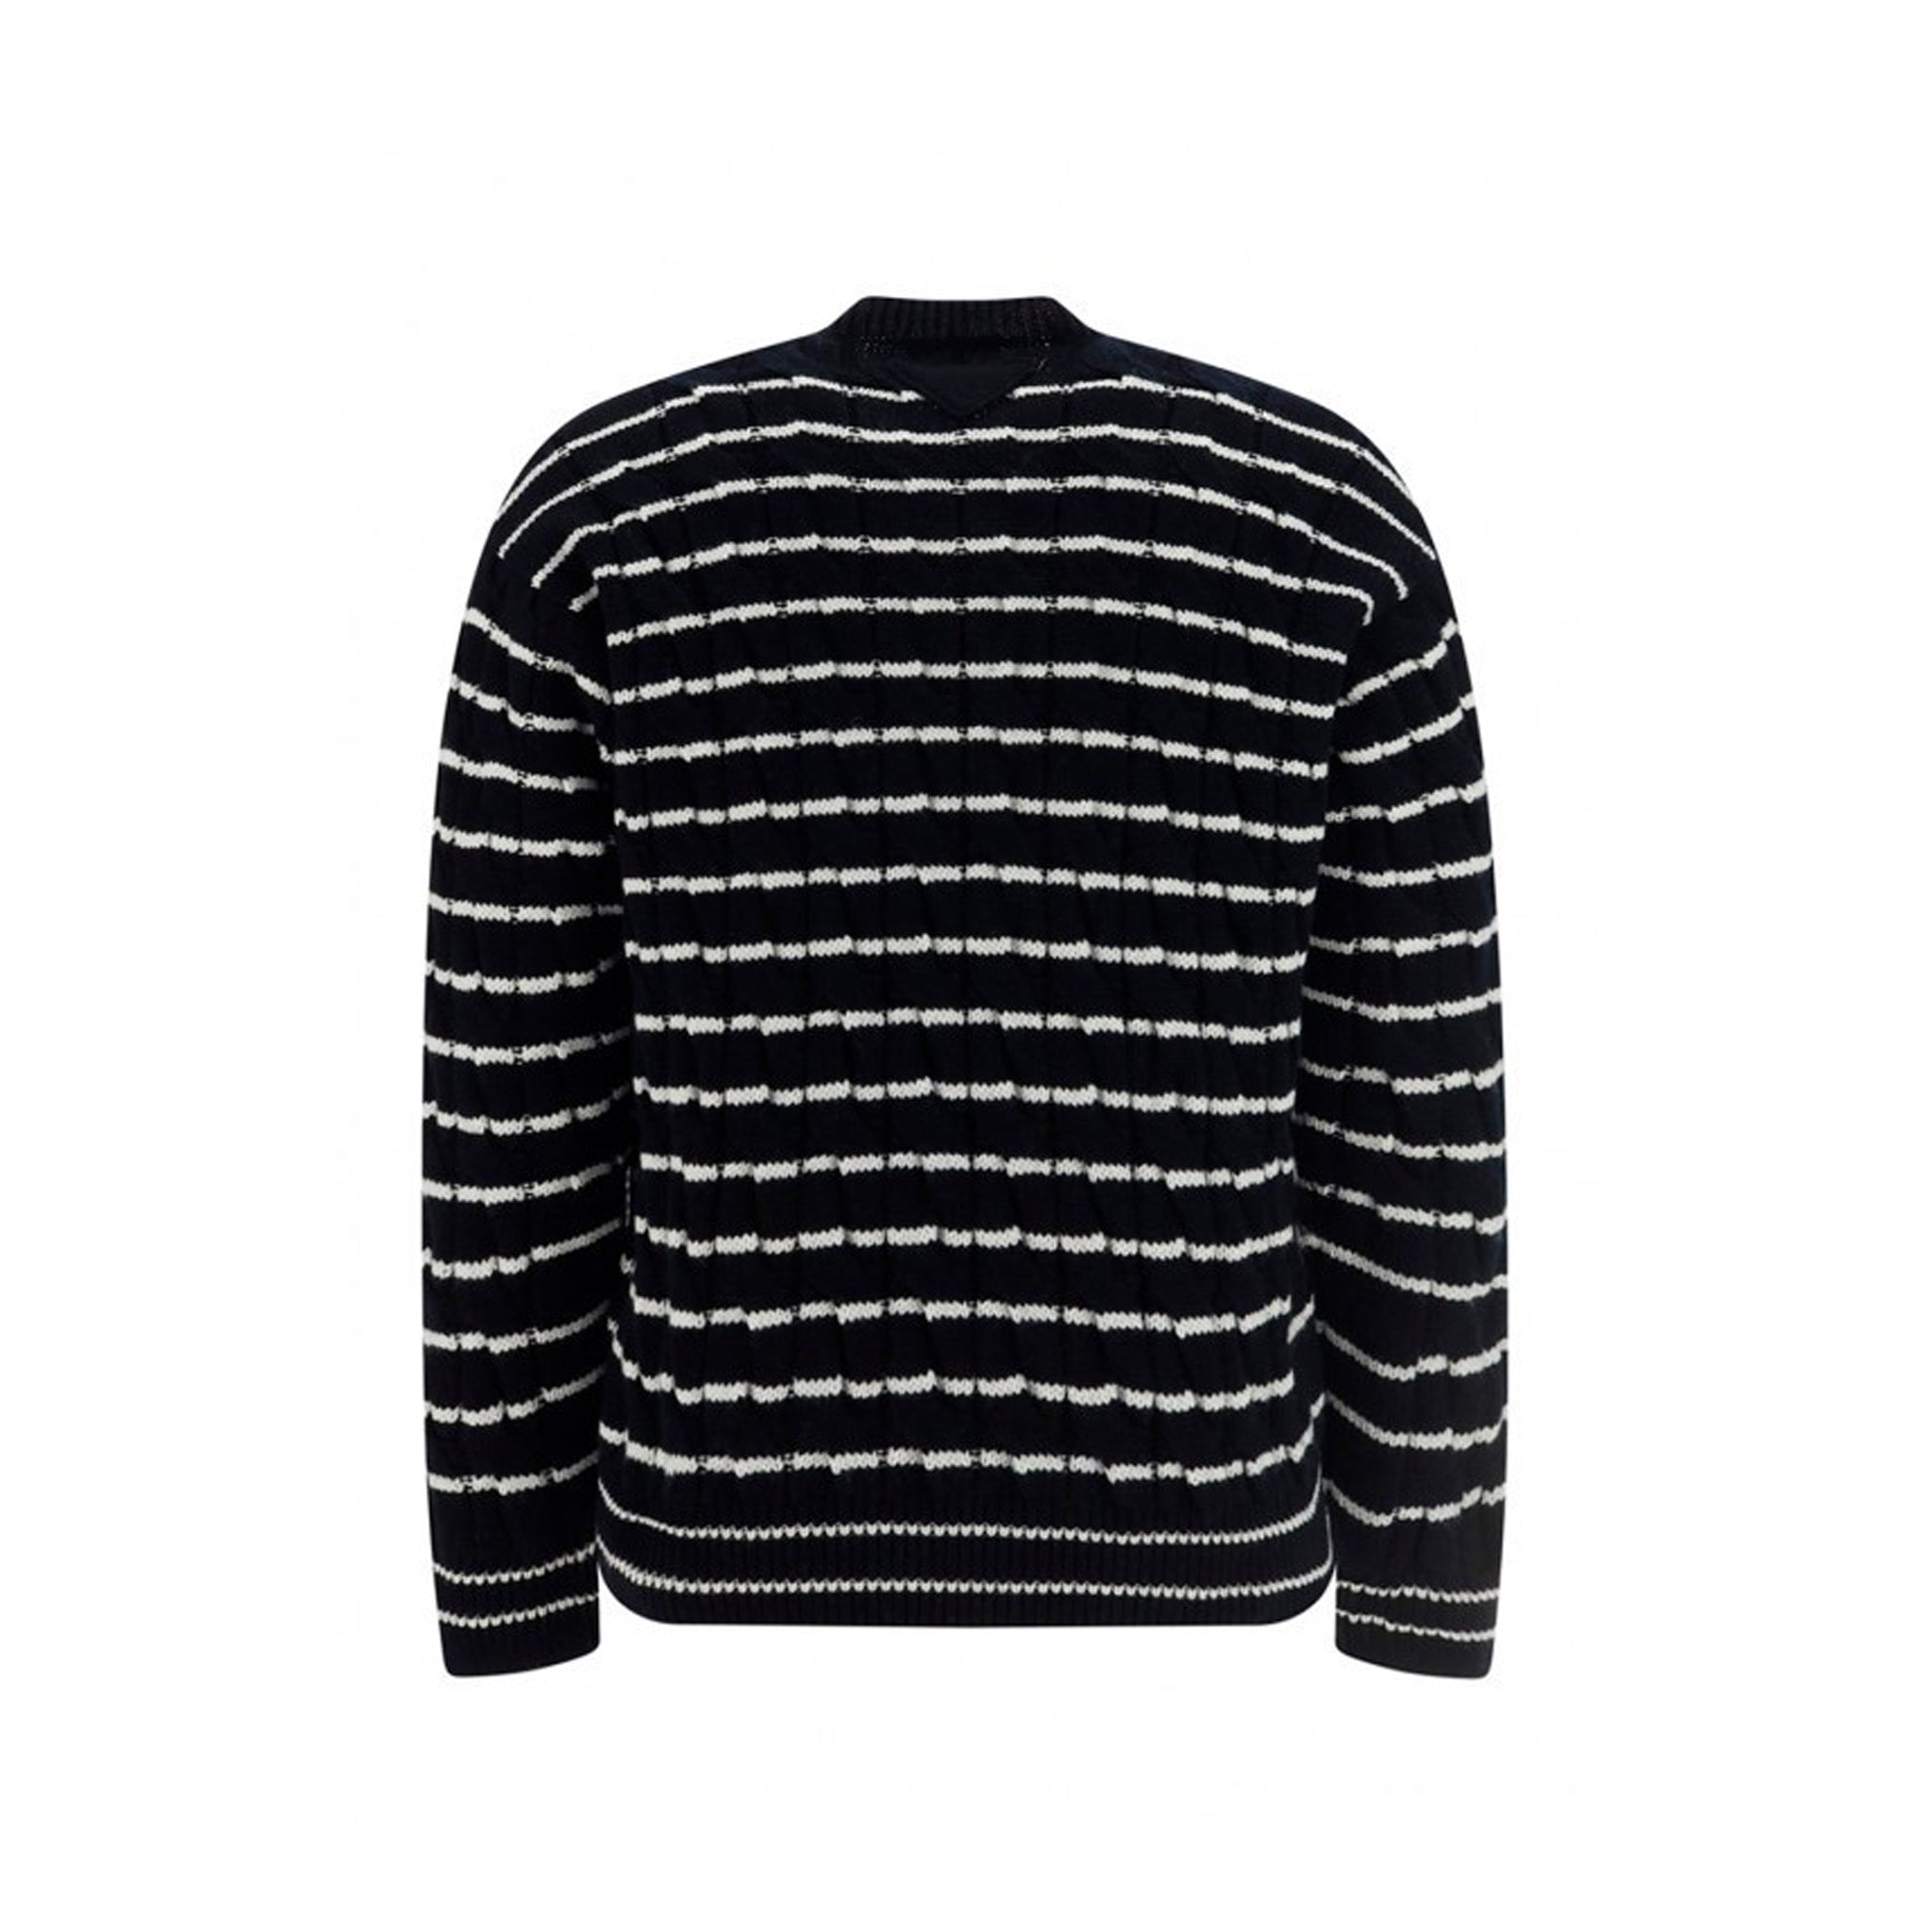 PRADA-Outlet-Sale-Prada Cashmere Sweater-MEN CLOTHING-ARCHIVIST